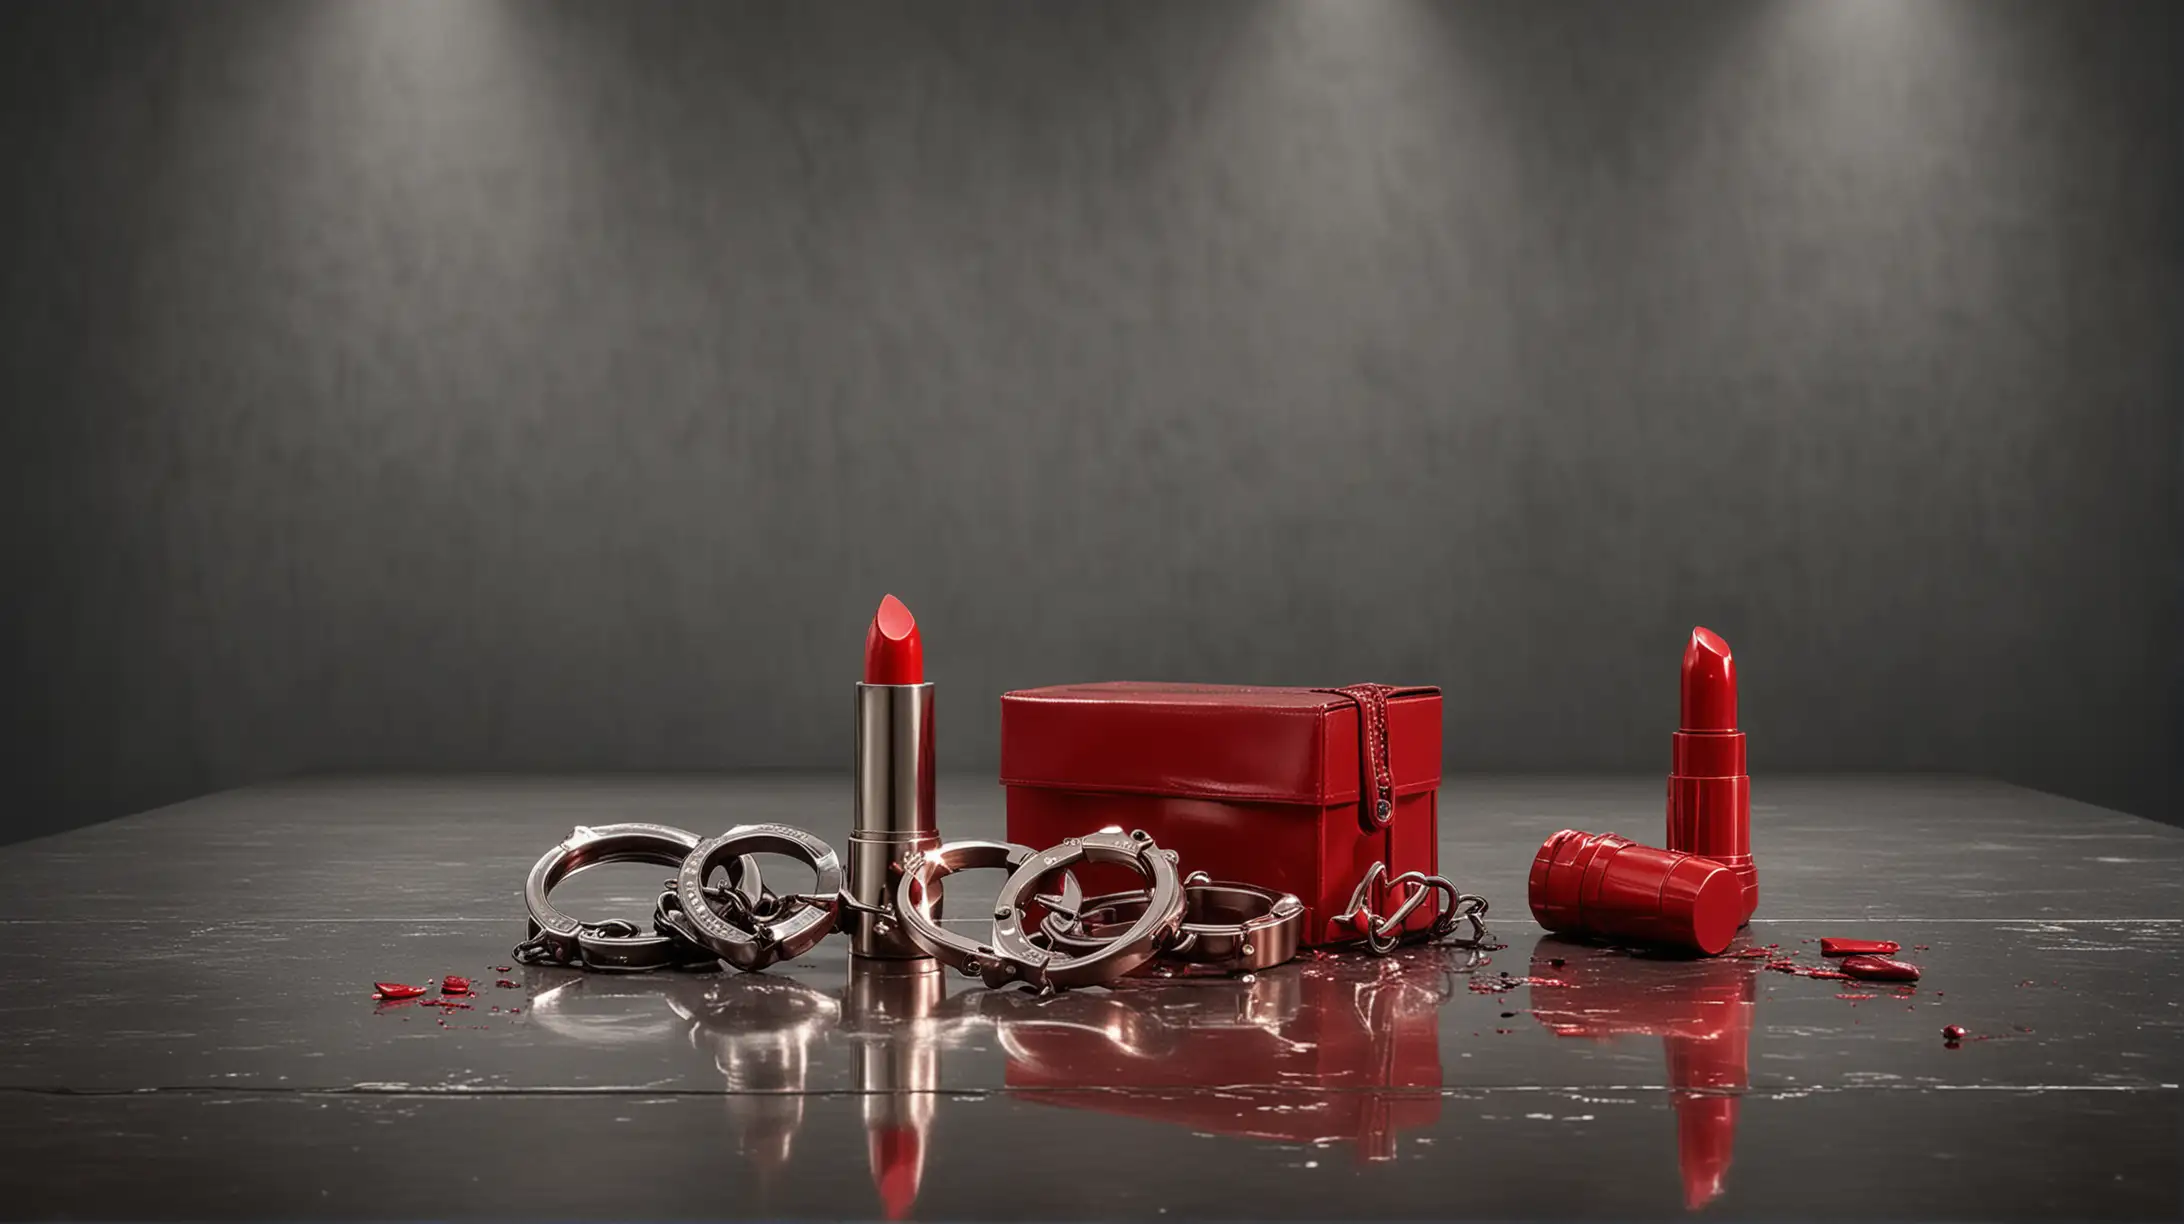 Intense Luxury Metallic Handcuffs and Red Lipstick Scene